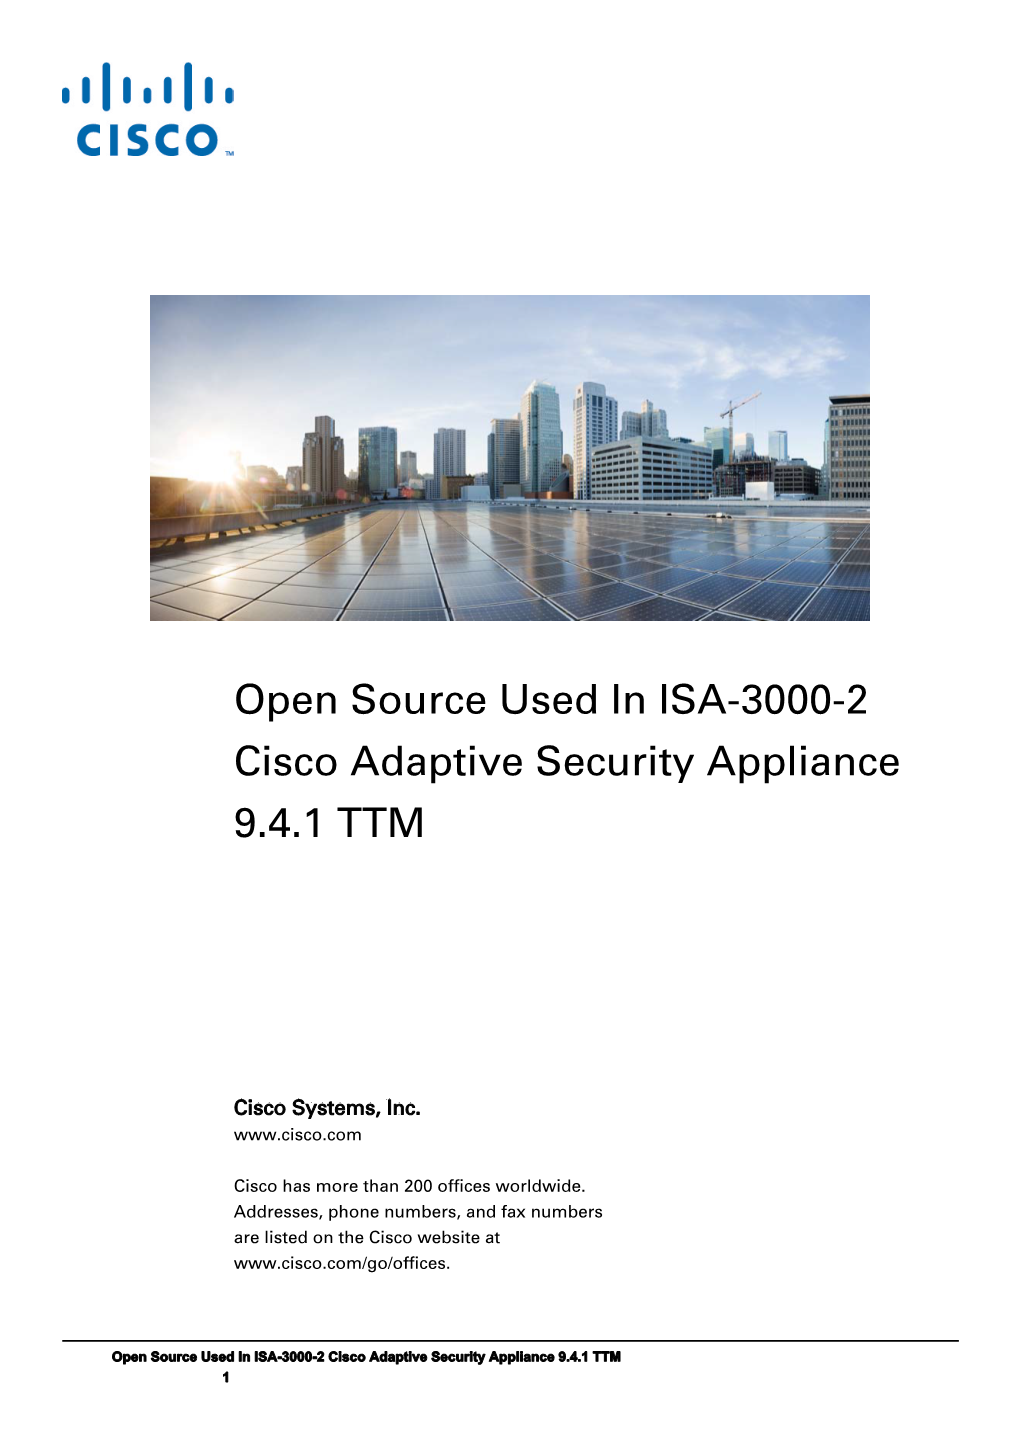 ISA 3000 Open Source Document